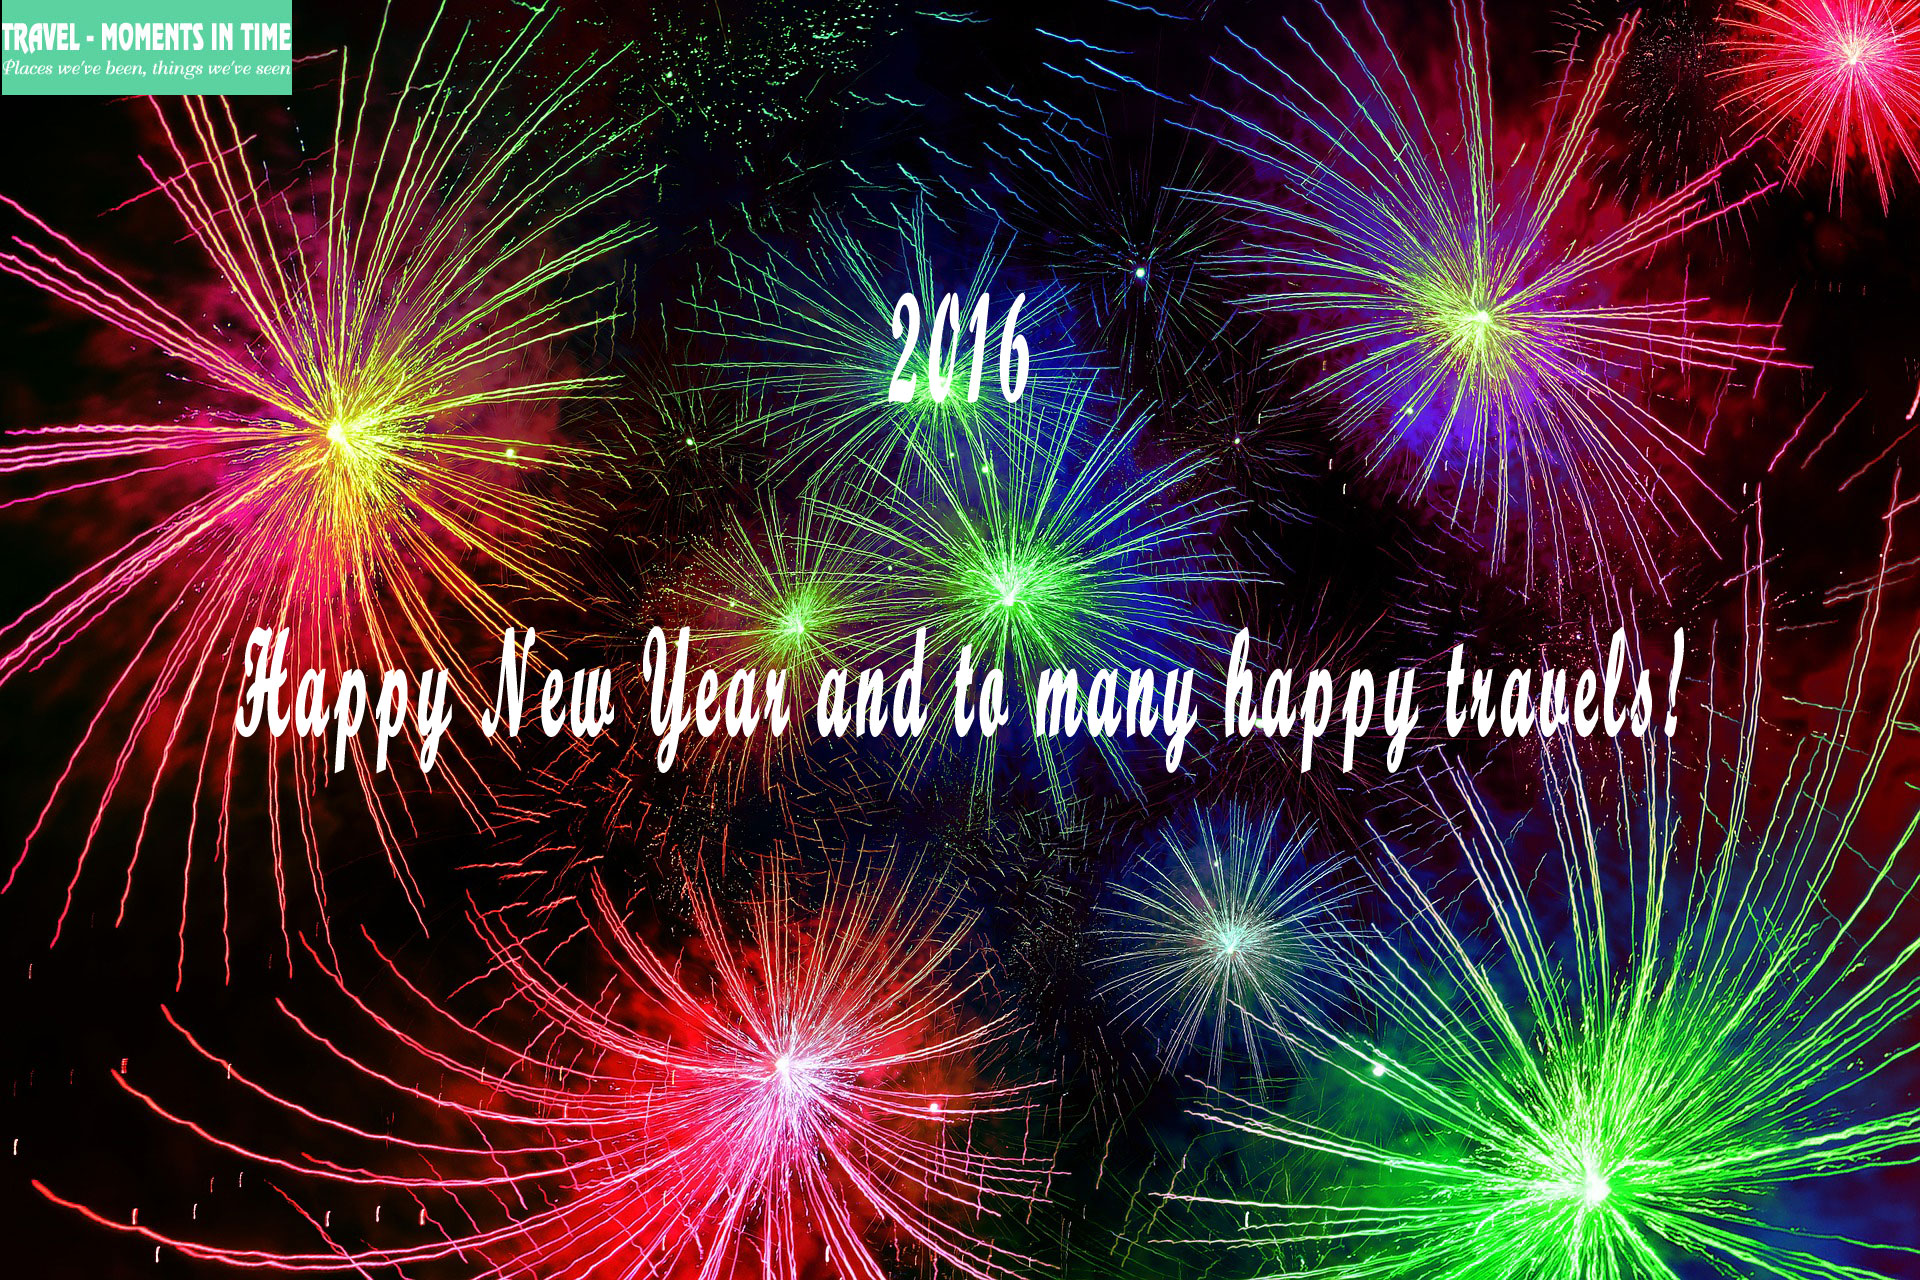 Happy New year 2016!